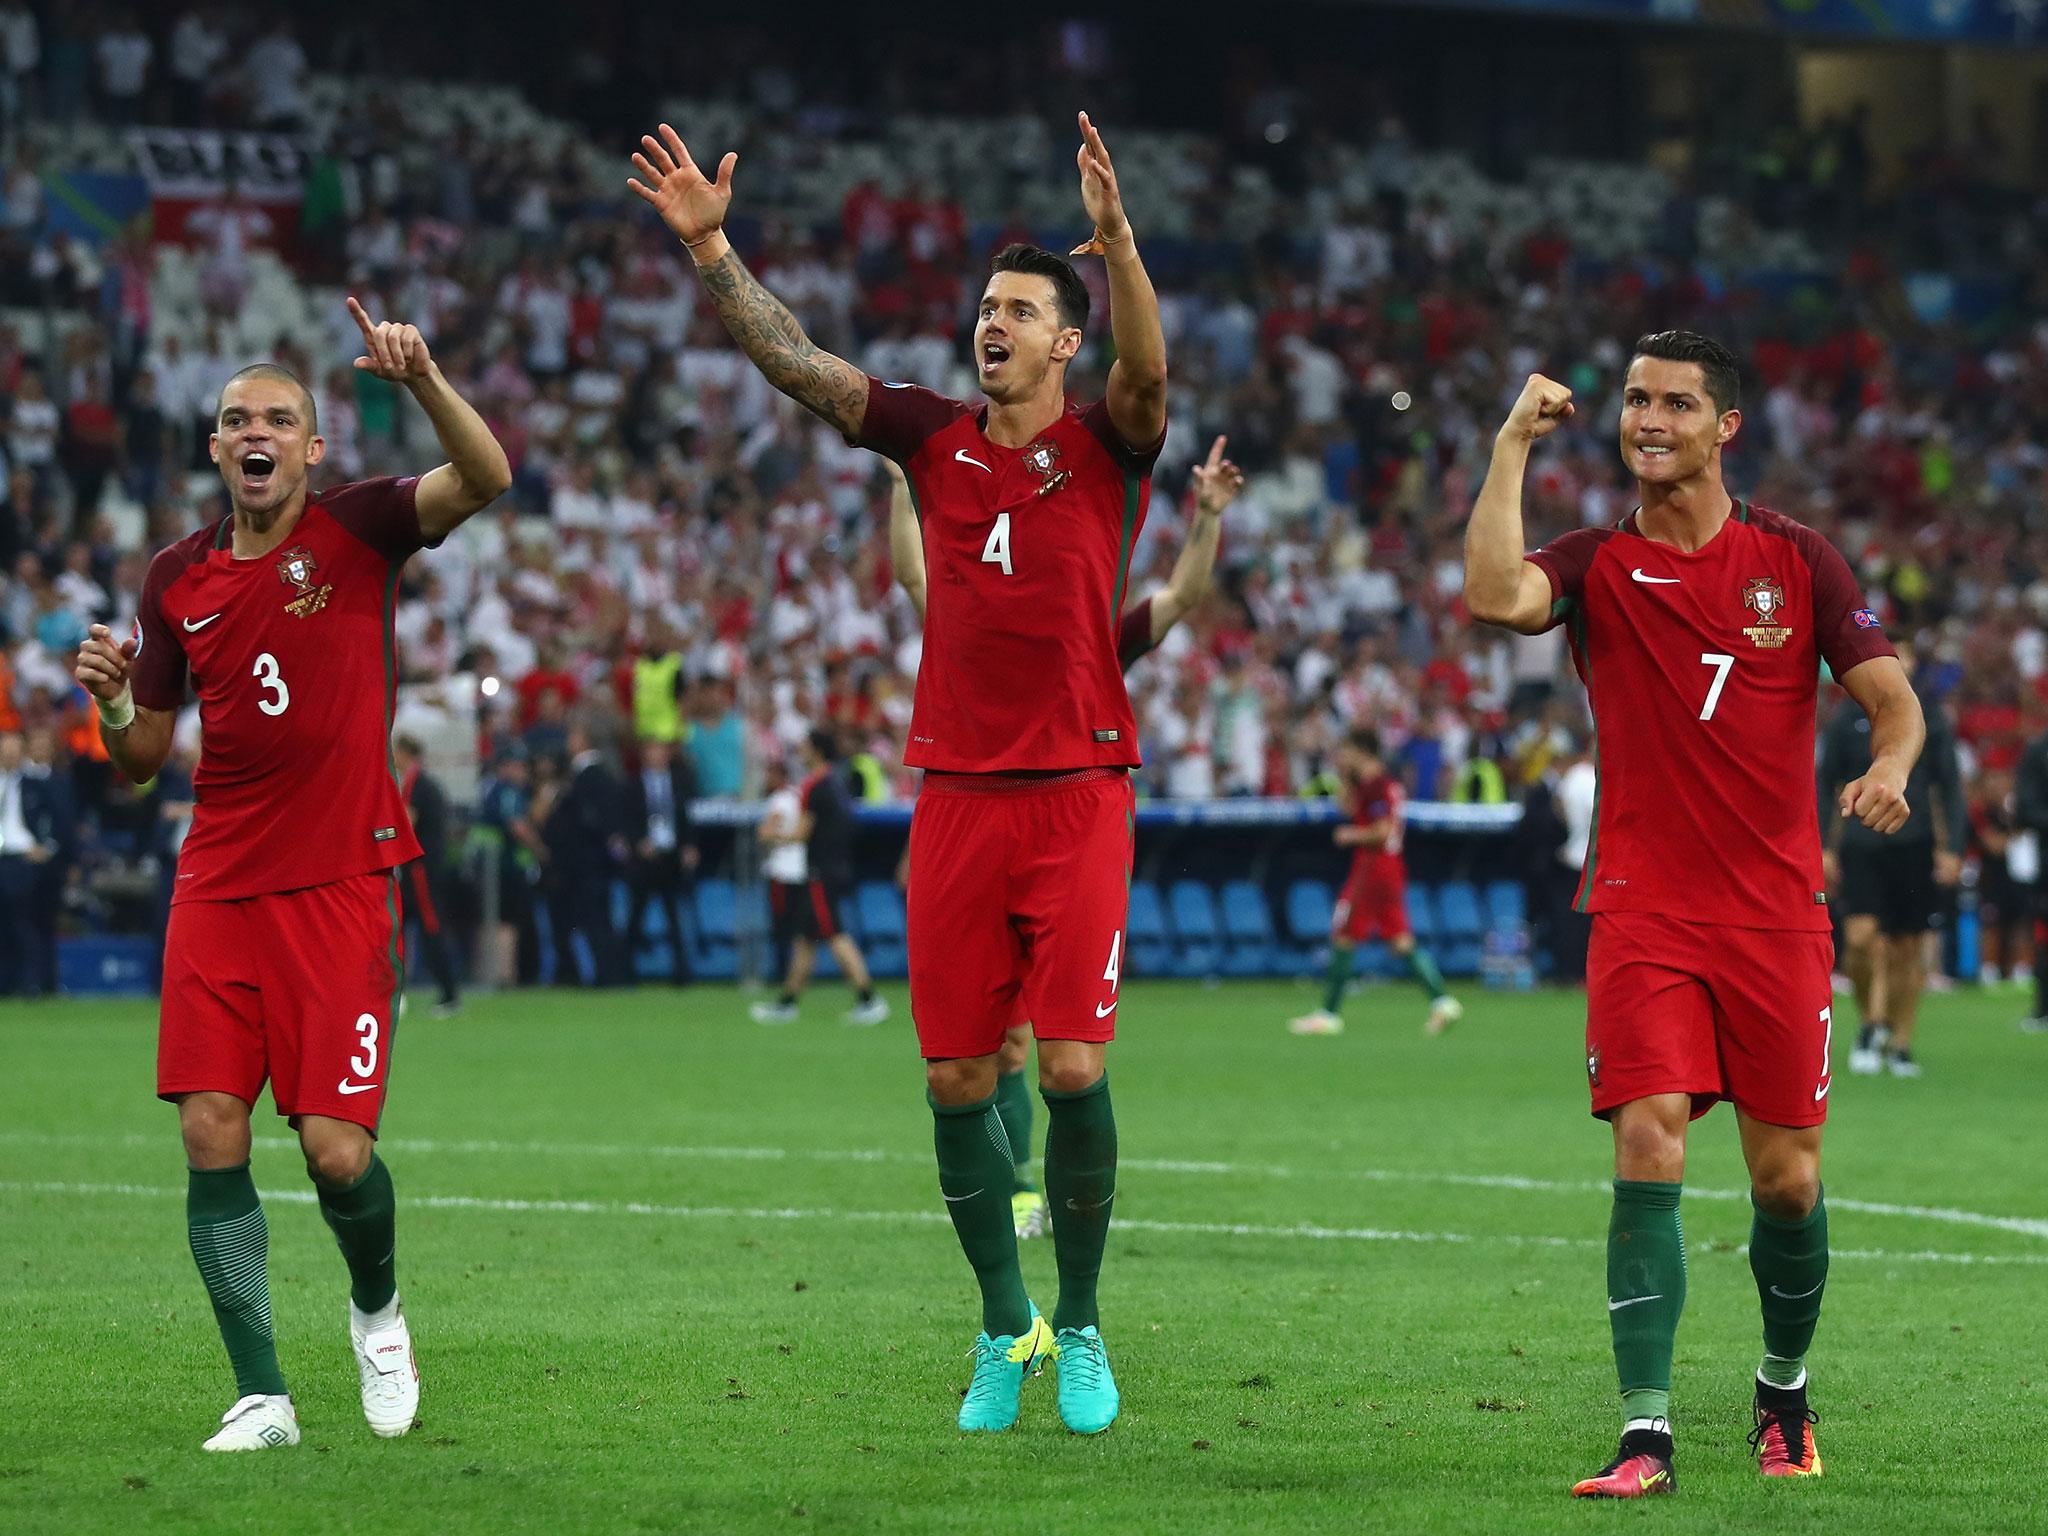 Poland vs Portugal match report Lewandowski finally gets off the mark